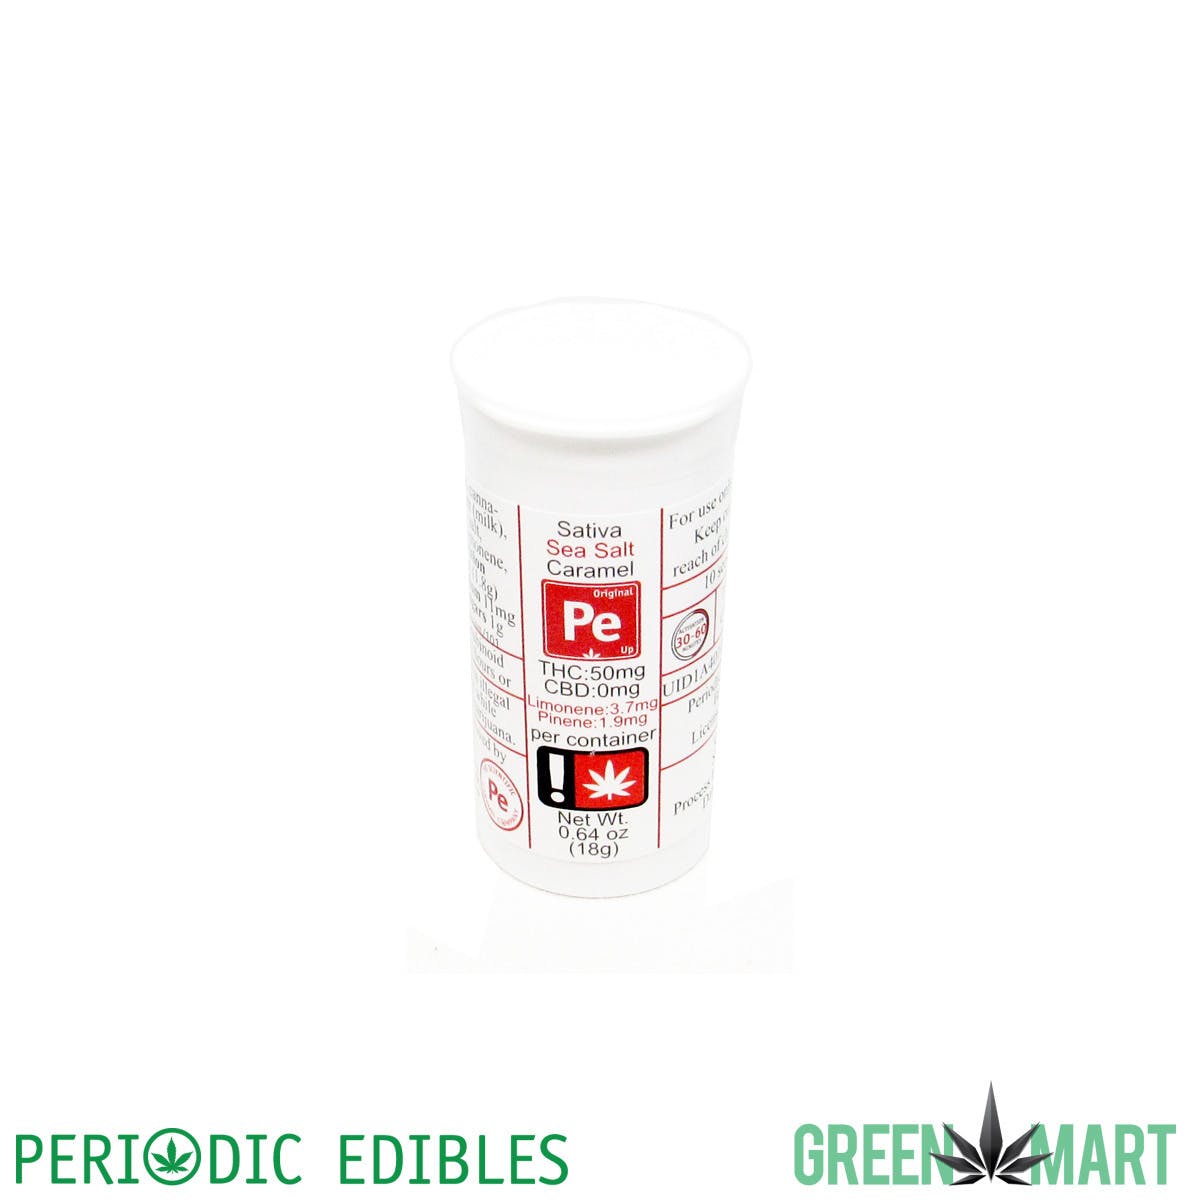 Periodic Edibles - Sativa Sea Salt Caramel